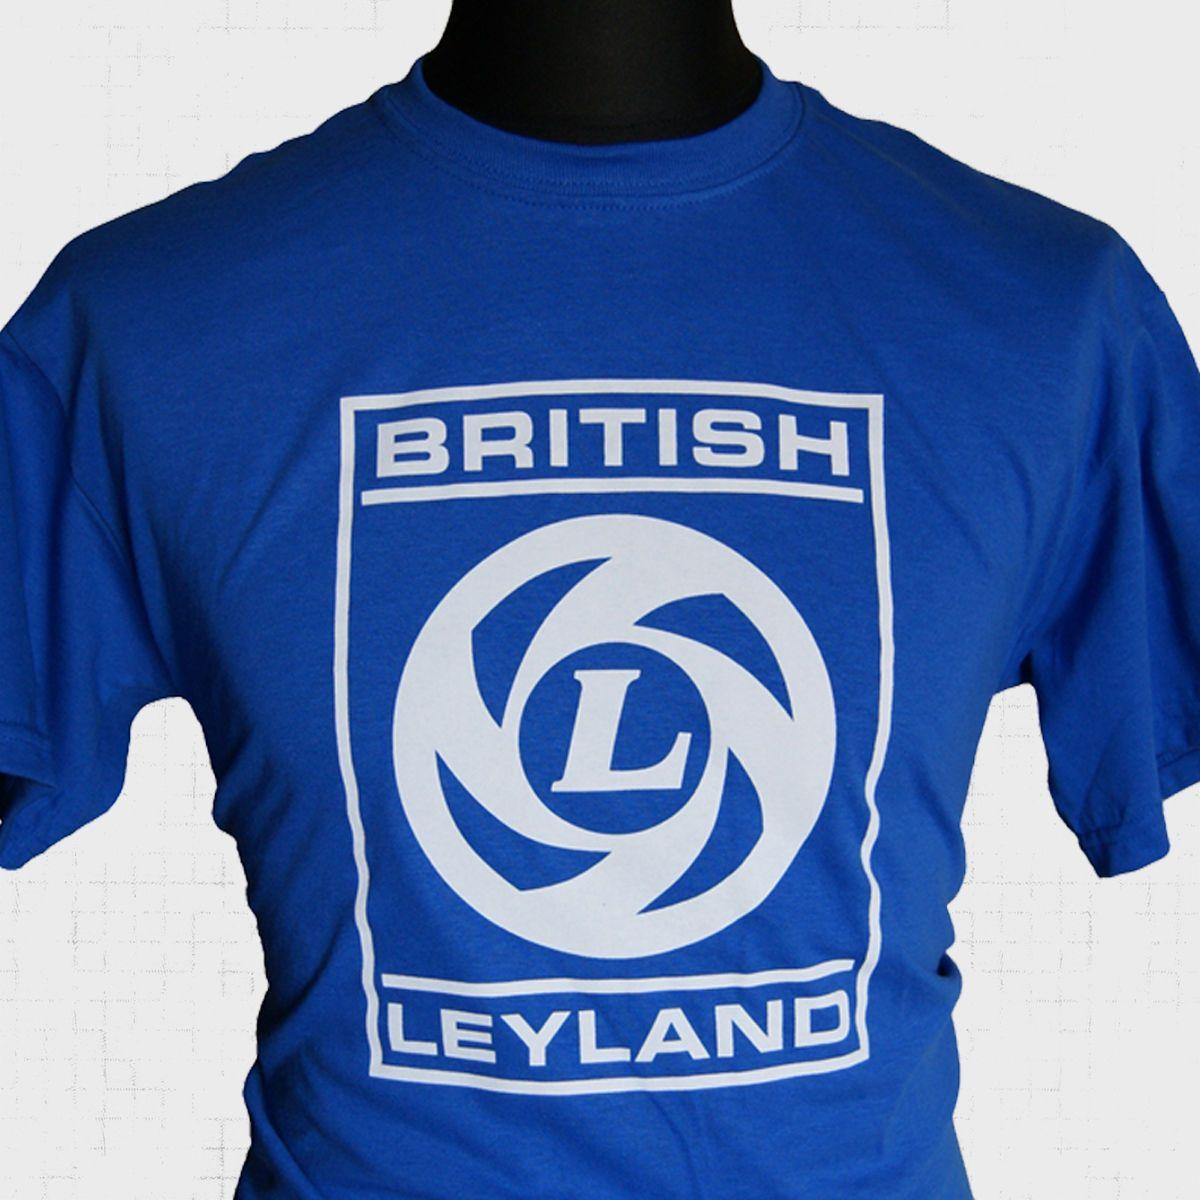 Old British Leyland Logo - British Leyland Cars Logo Vintage Austin New T Shirt Retro Vintage ...